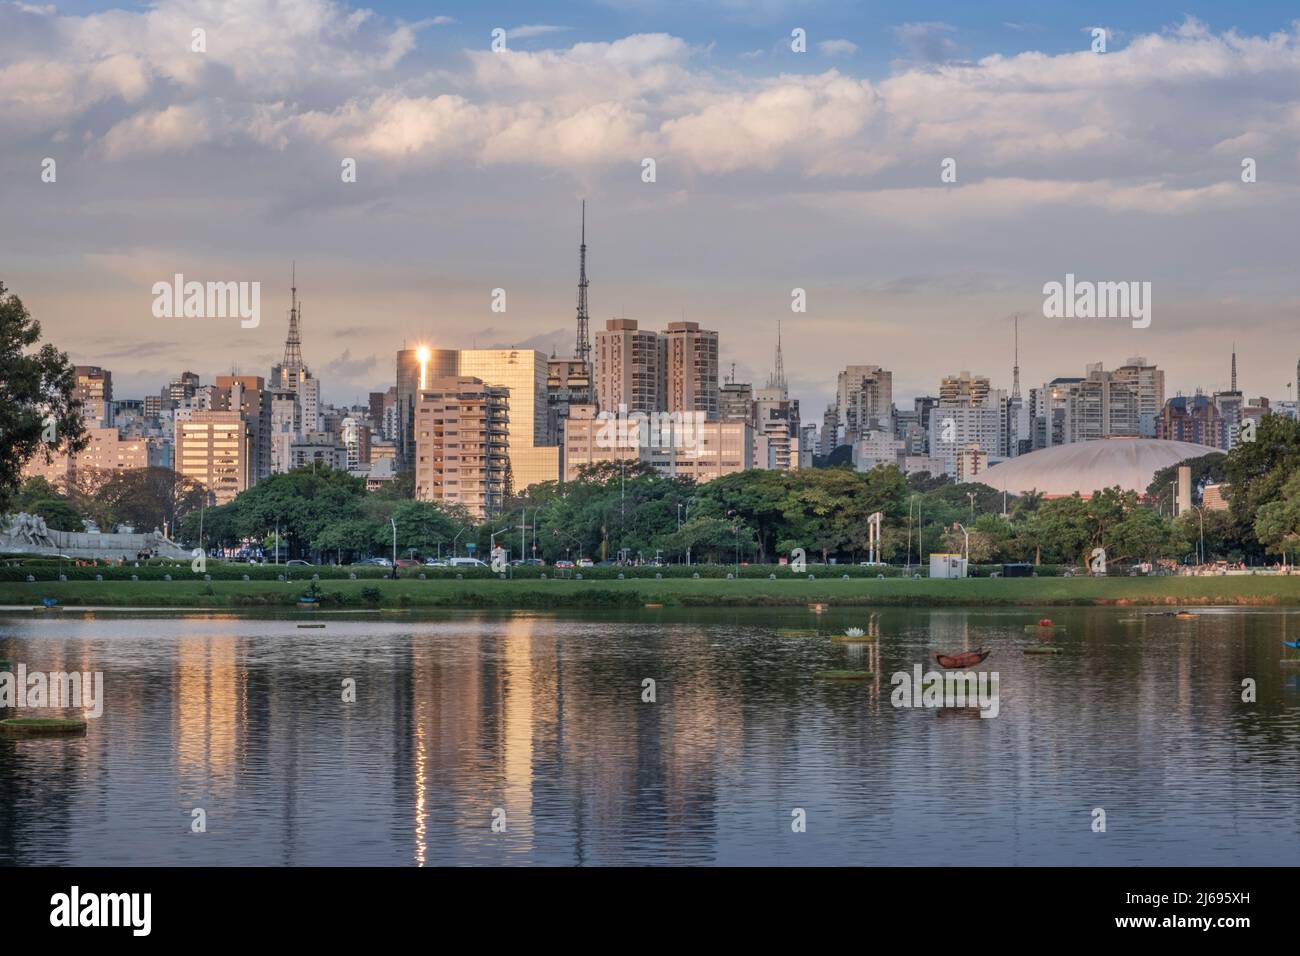 The downtown urban skyline reflected in Lago das Garcas lake at twilight, Ibirapuera Park, Sao Paulo, Brazil Stock Photo